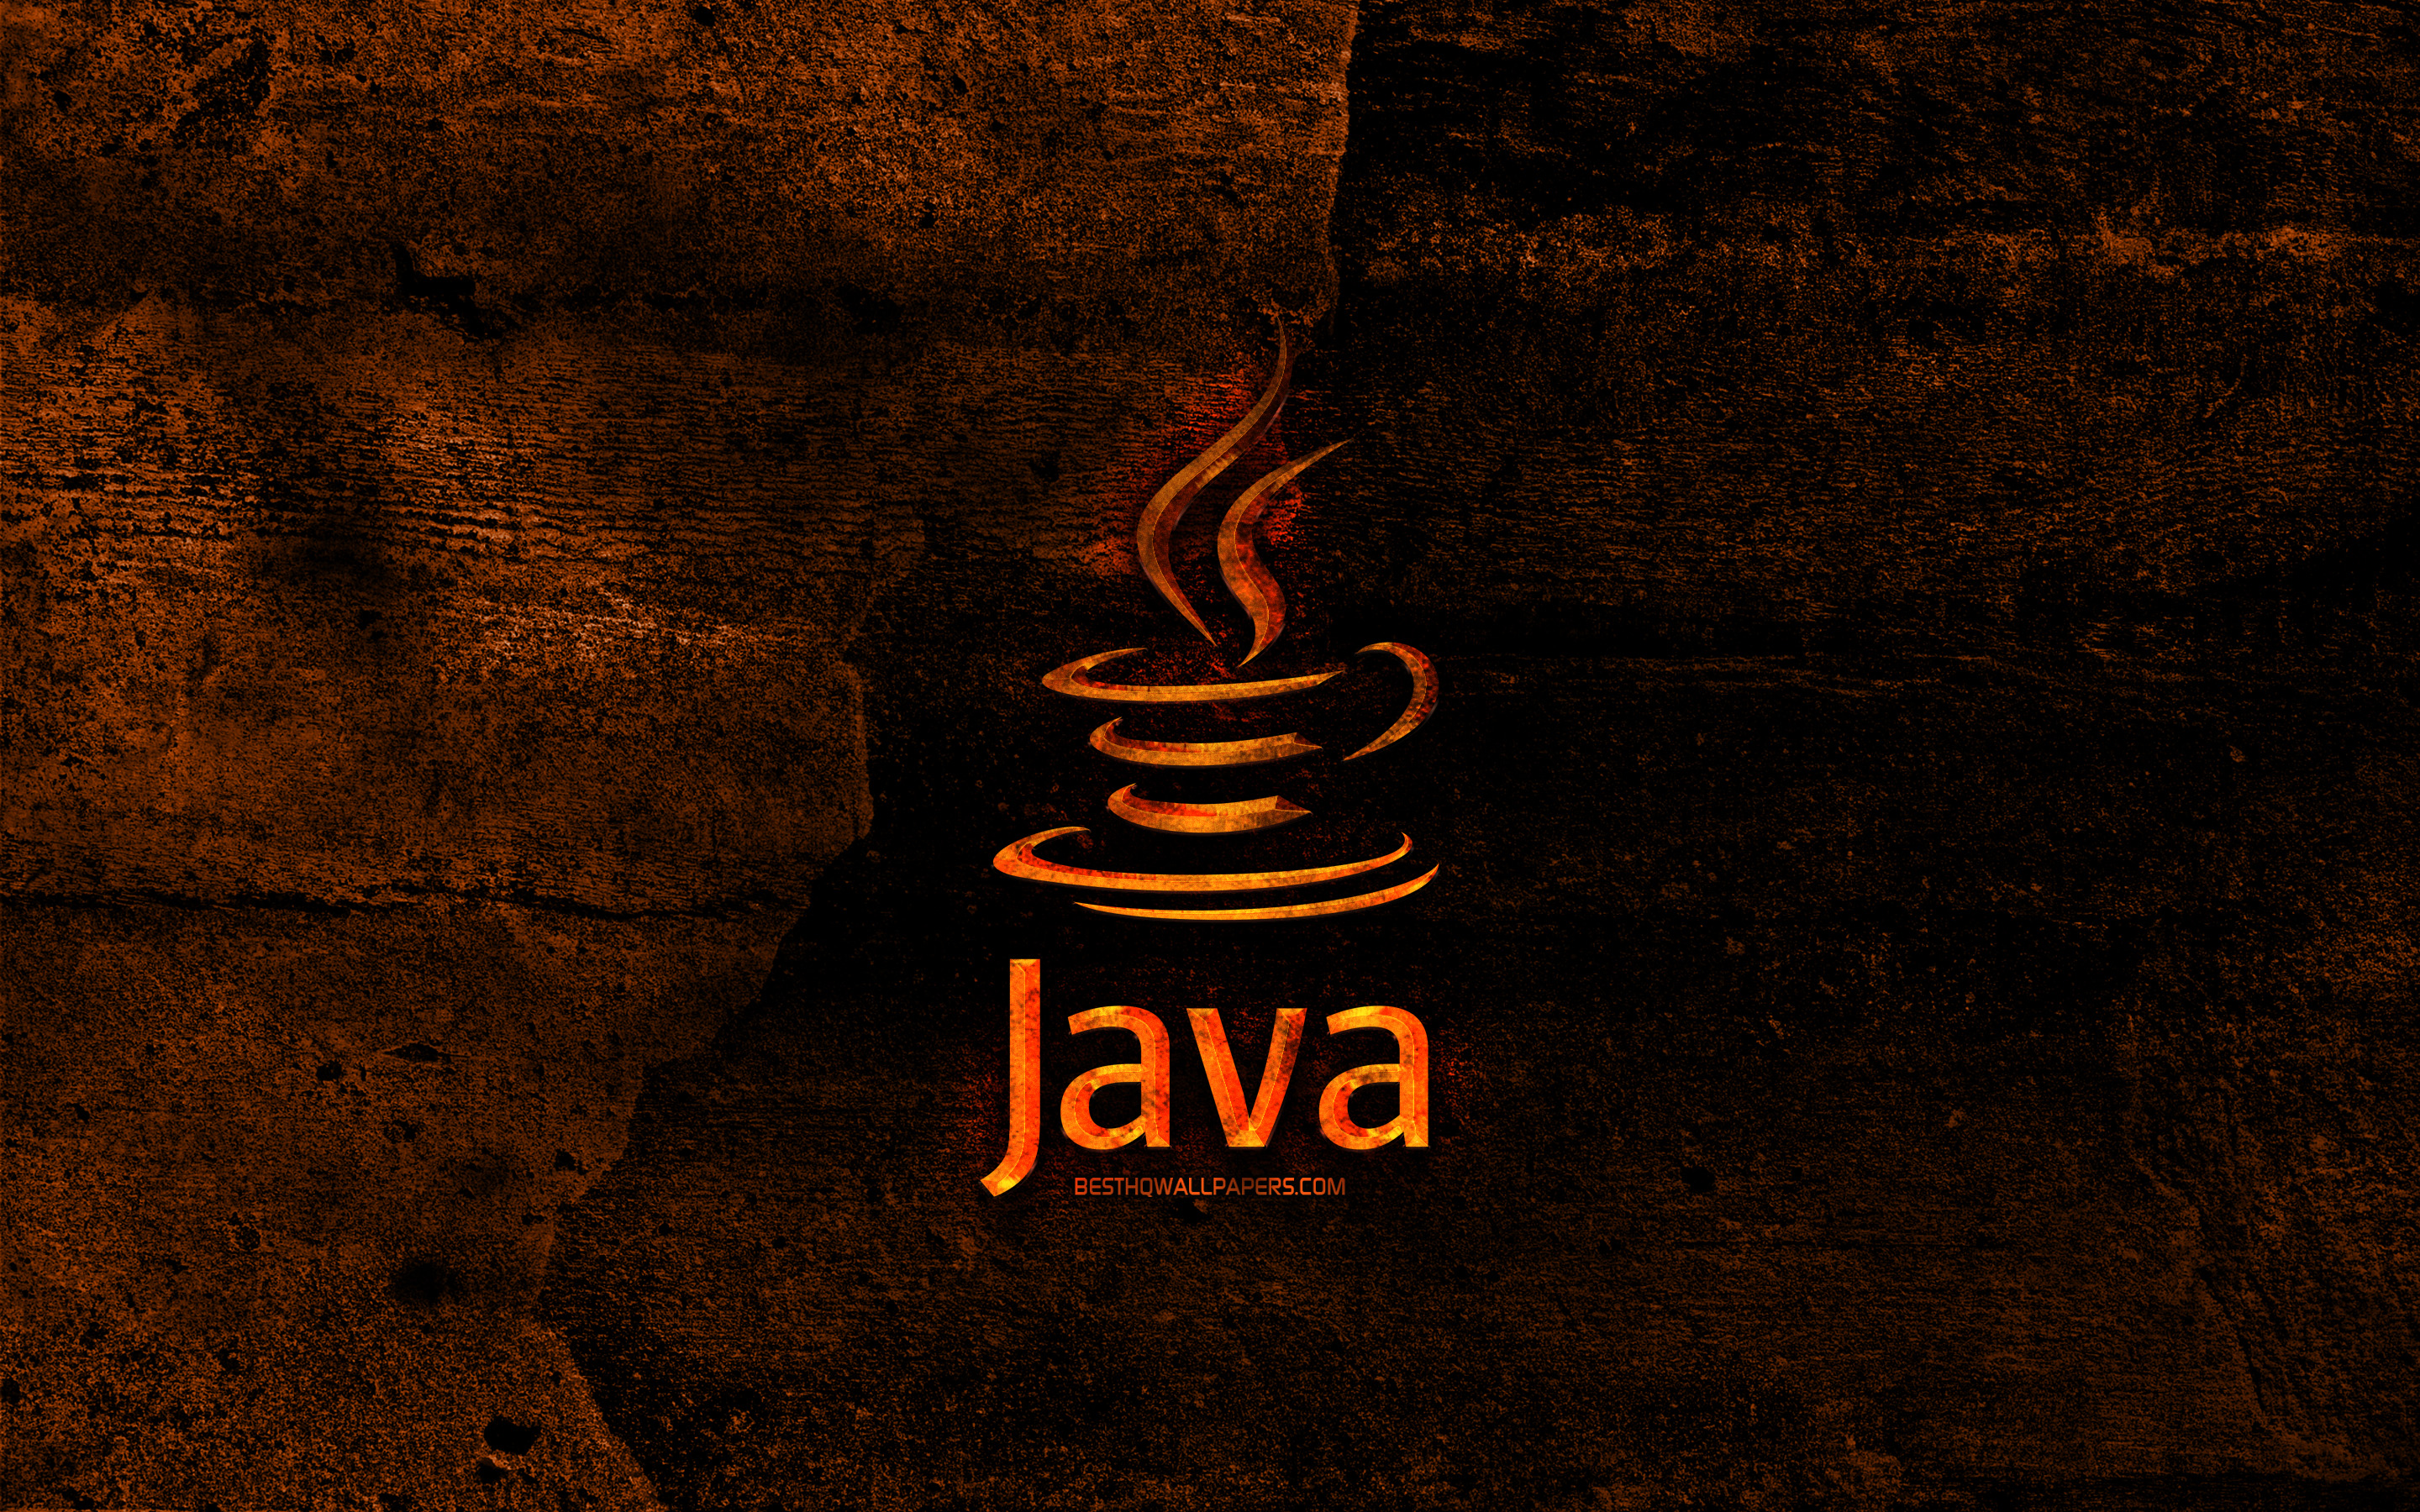 Download wallpaper Java fiery logo, programming language, orange stone background, creative, Java logo, programming language signs, Java for desktop with resolution 2880x1800. High Quality HD picture wallpaper